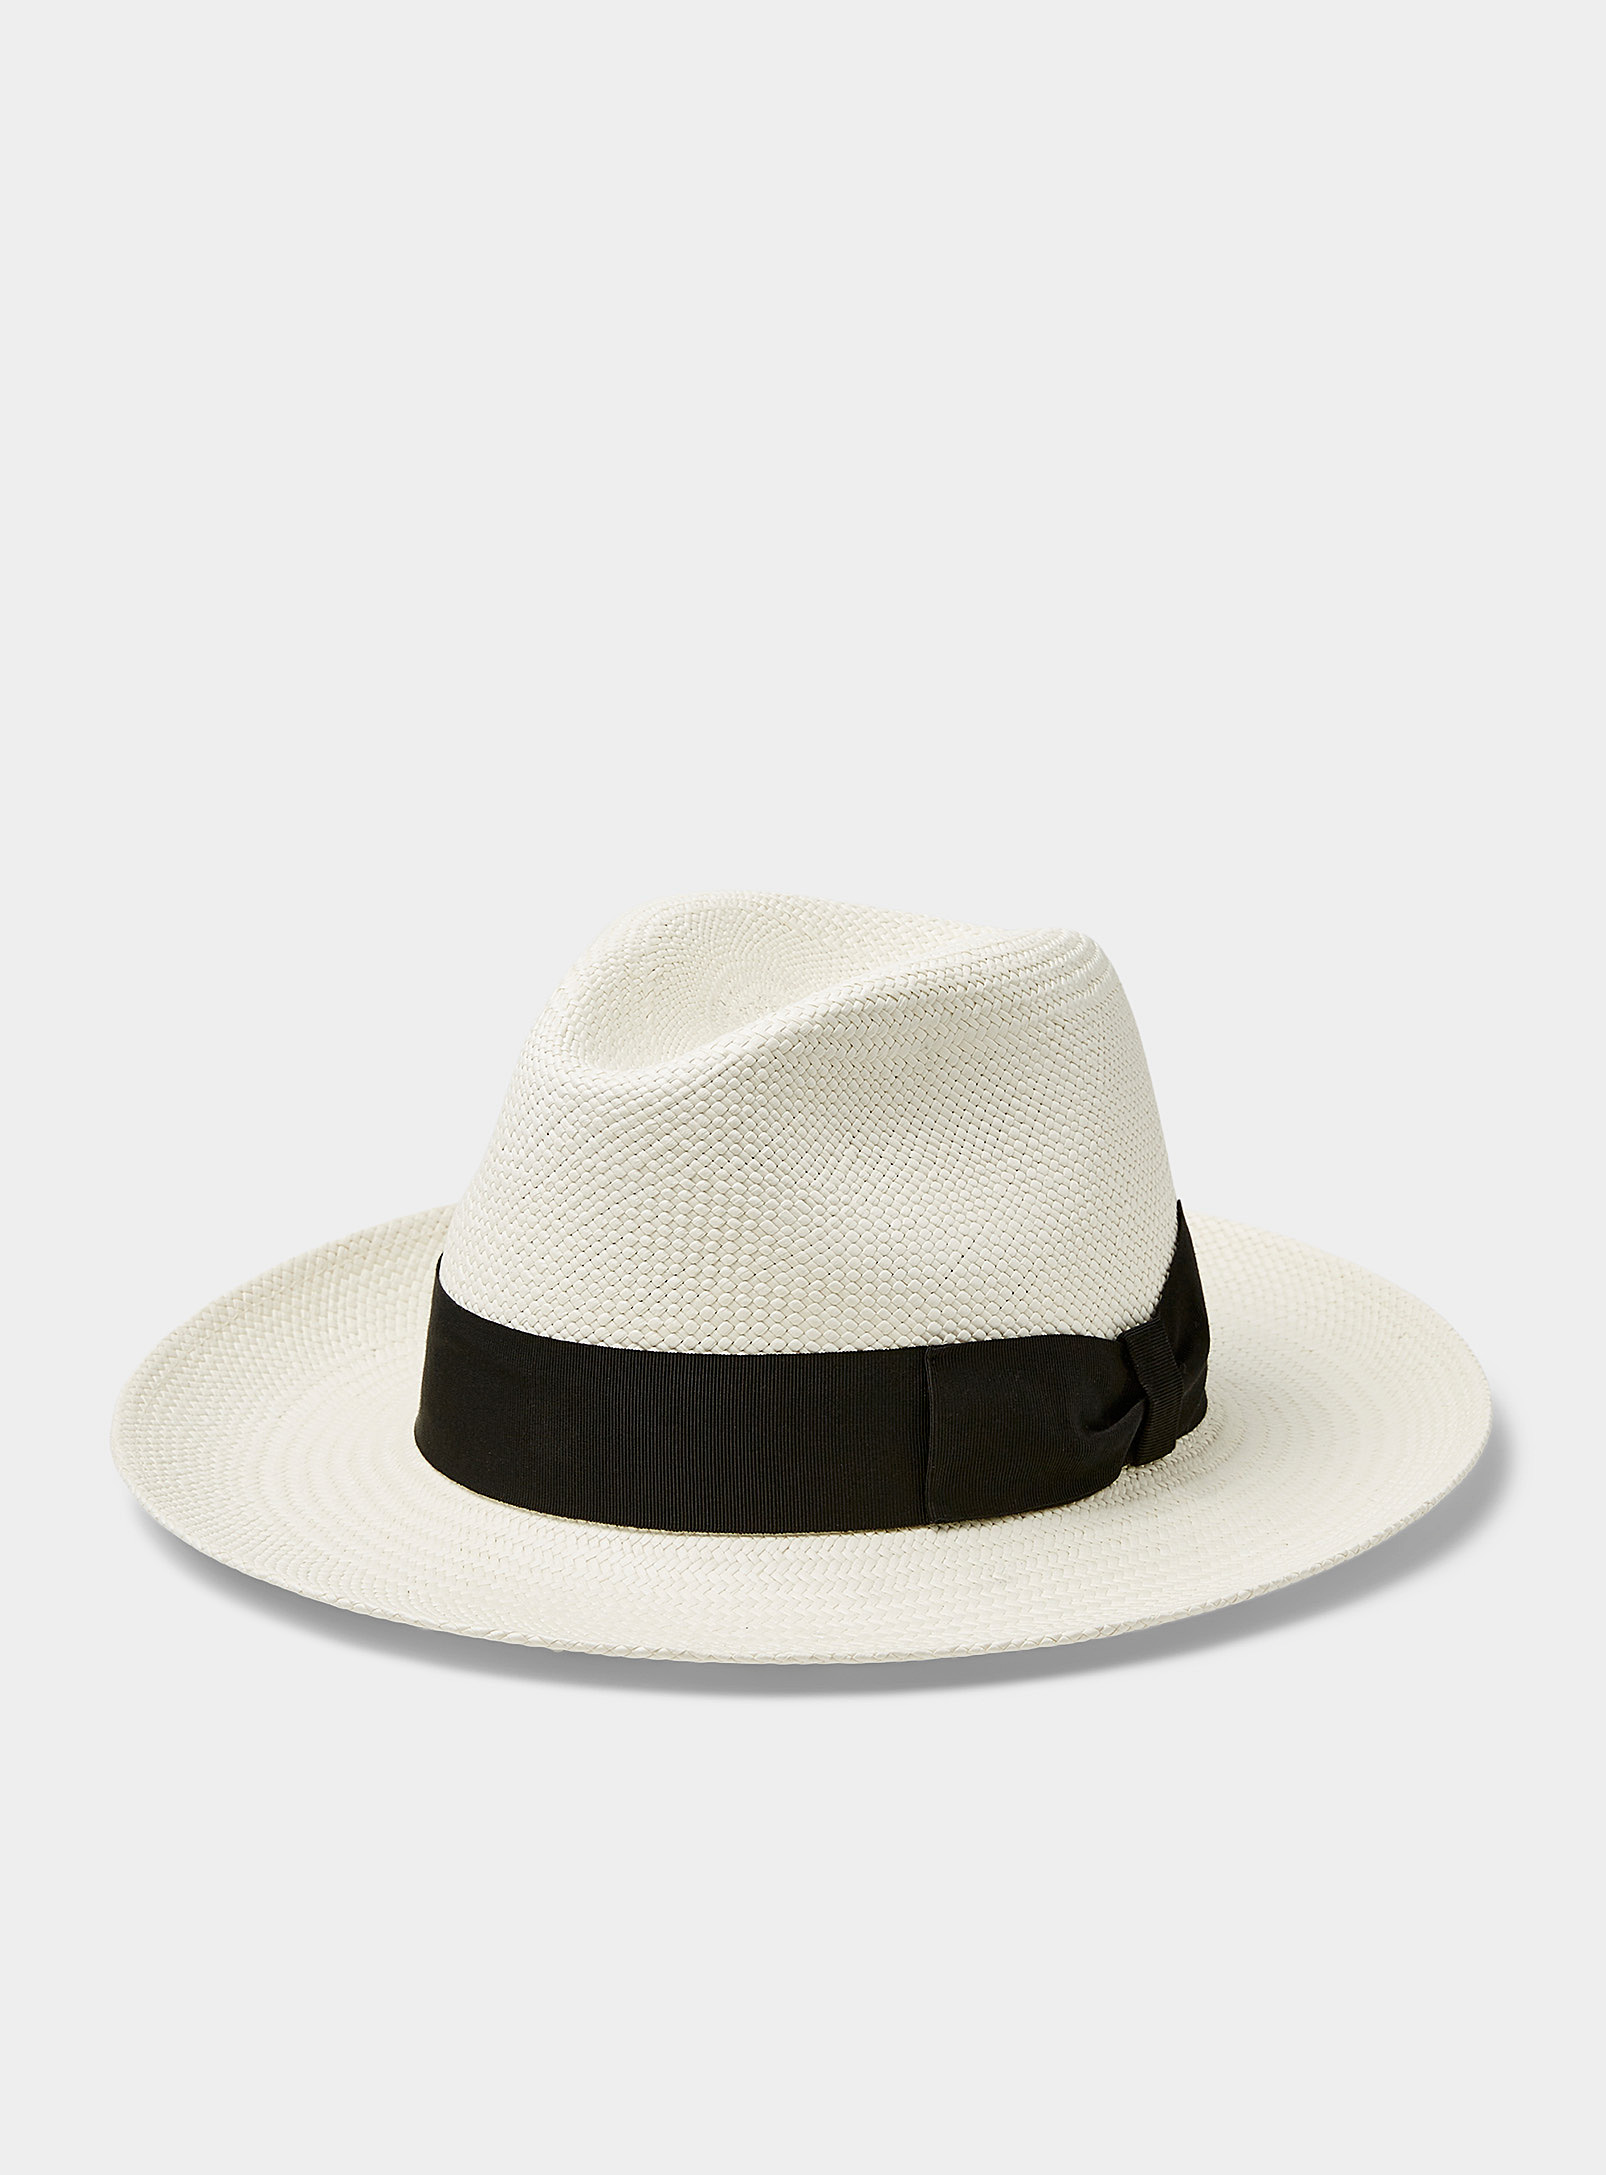 Le 31 - Men's Black-band cream Panama hat